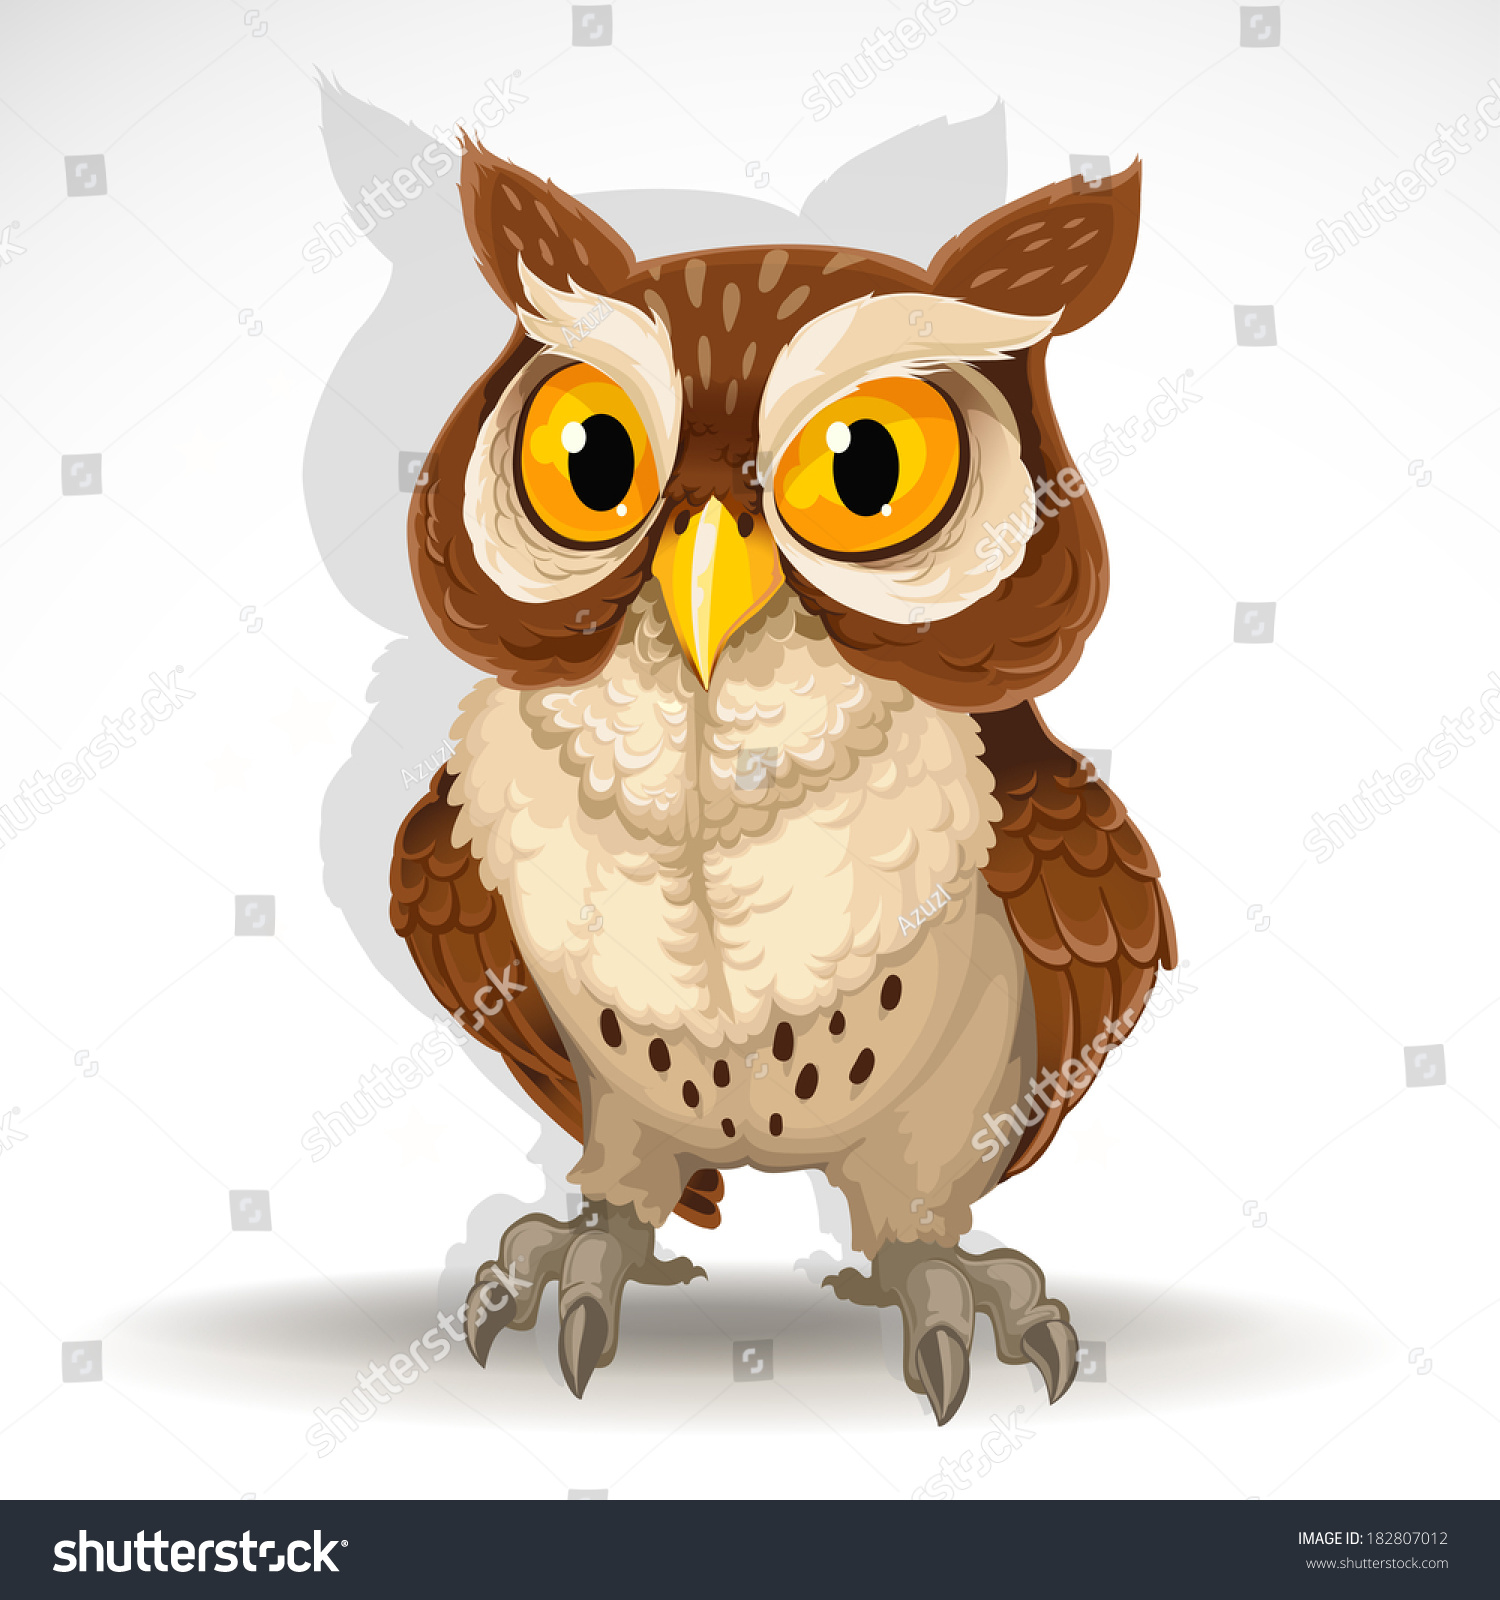 Cute Cartoon Owl Isolated On White Stock Vector 182807012 - Shutterstock